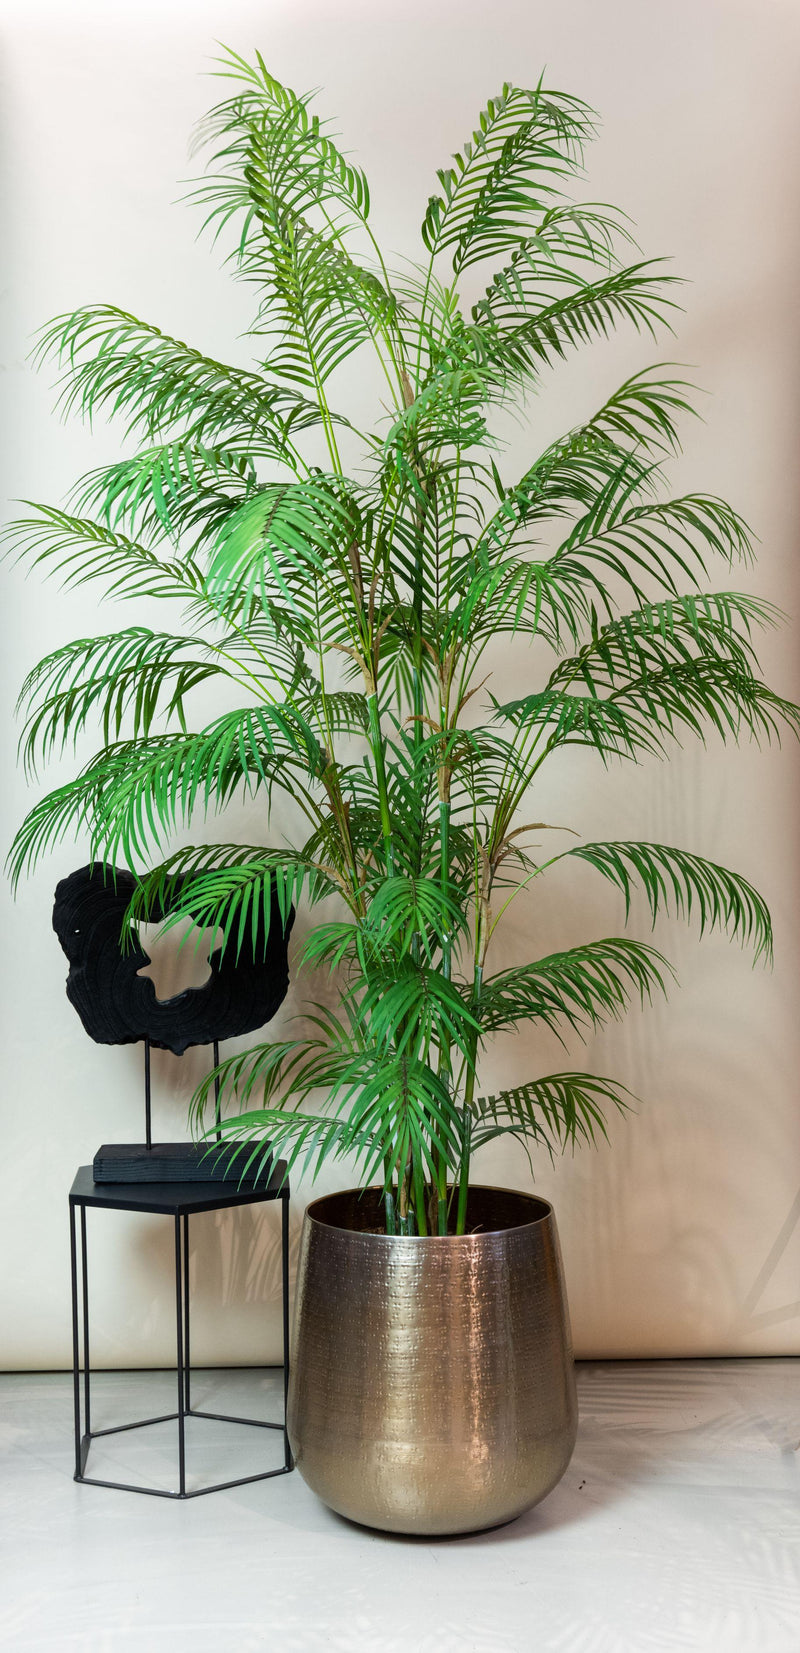 Chamaedorea Elegans - Bergpalme - 180 cm - kunstpflanze